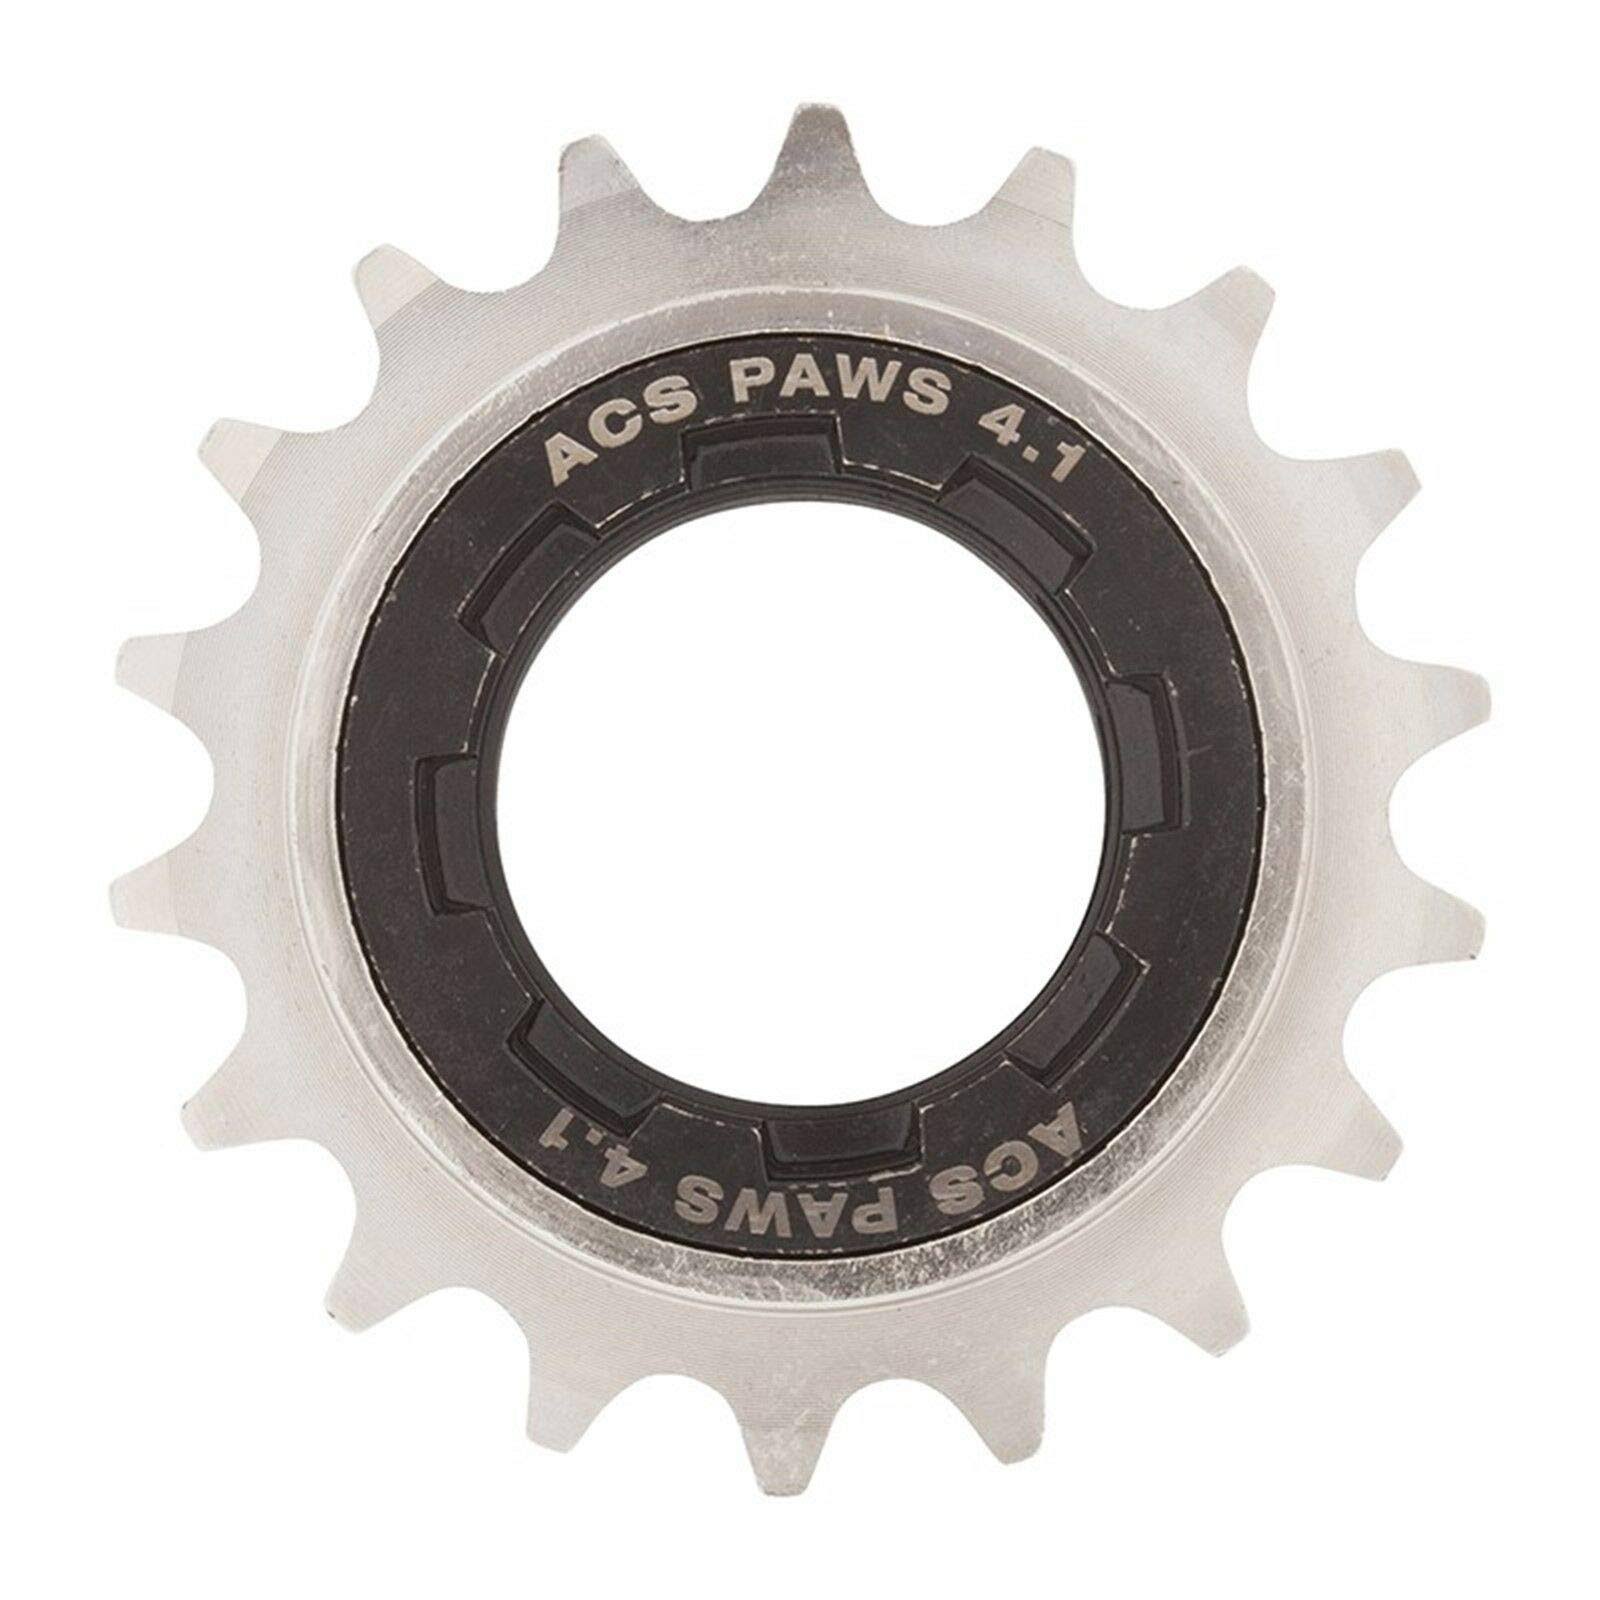 ACS Paws 4.1 Single BMX Freewheel - Black & Nickel, 18T